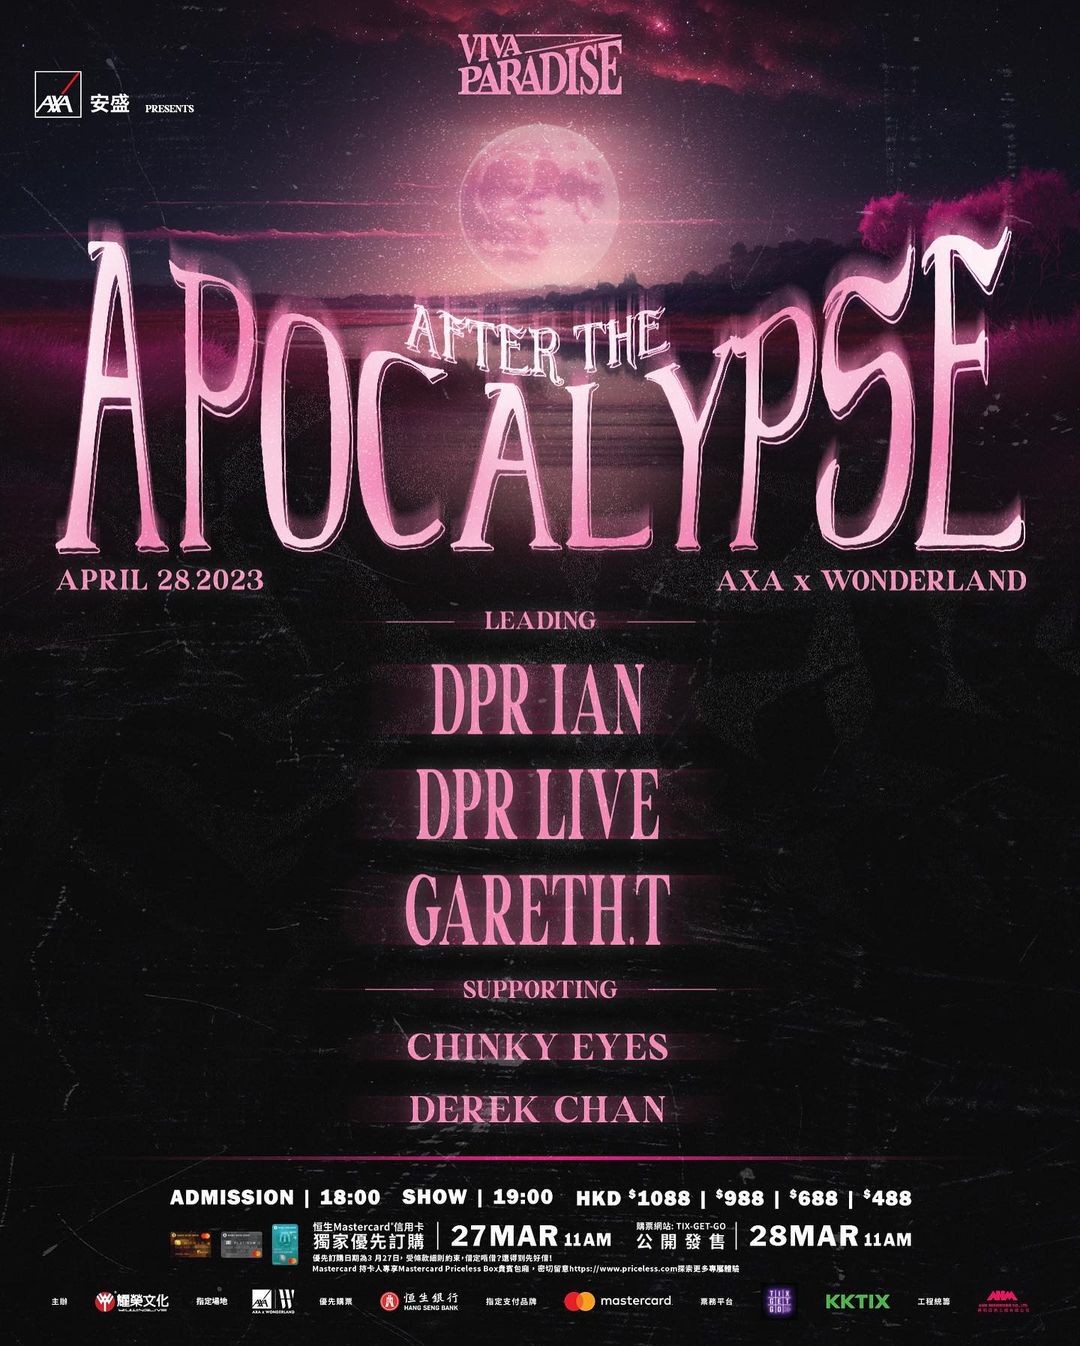 After the Apocalypse Concert｜DPR Live x DPR Ian x Gareth.T